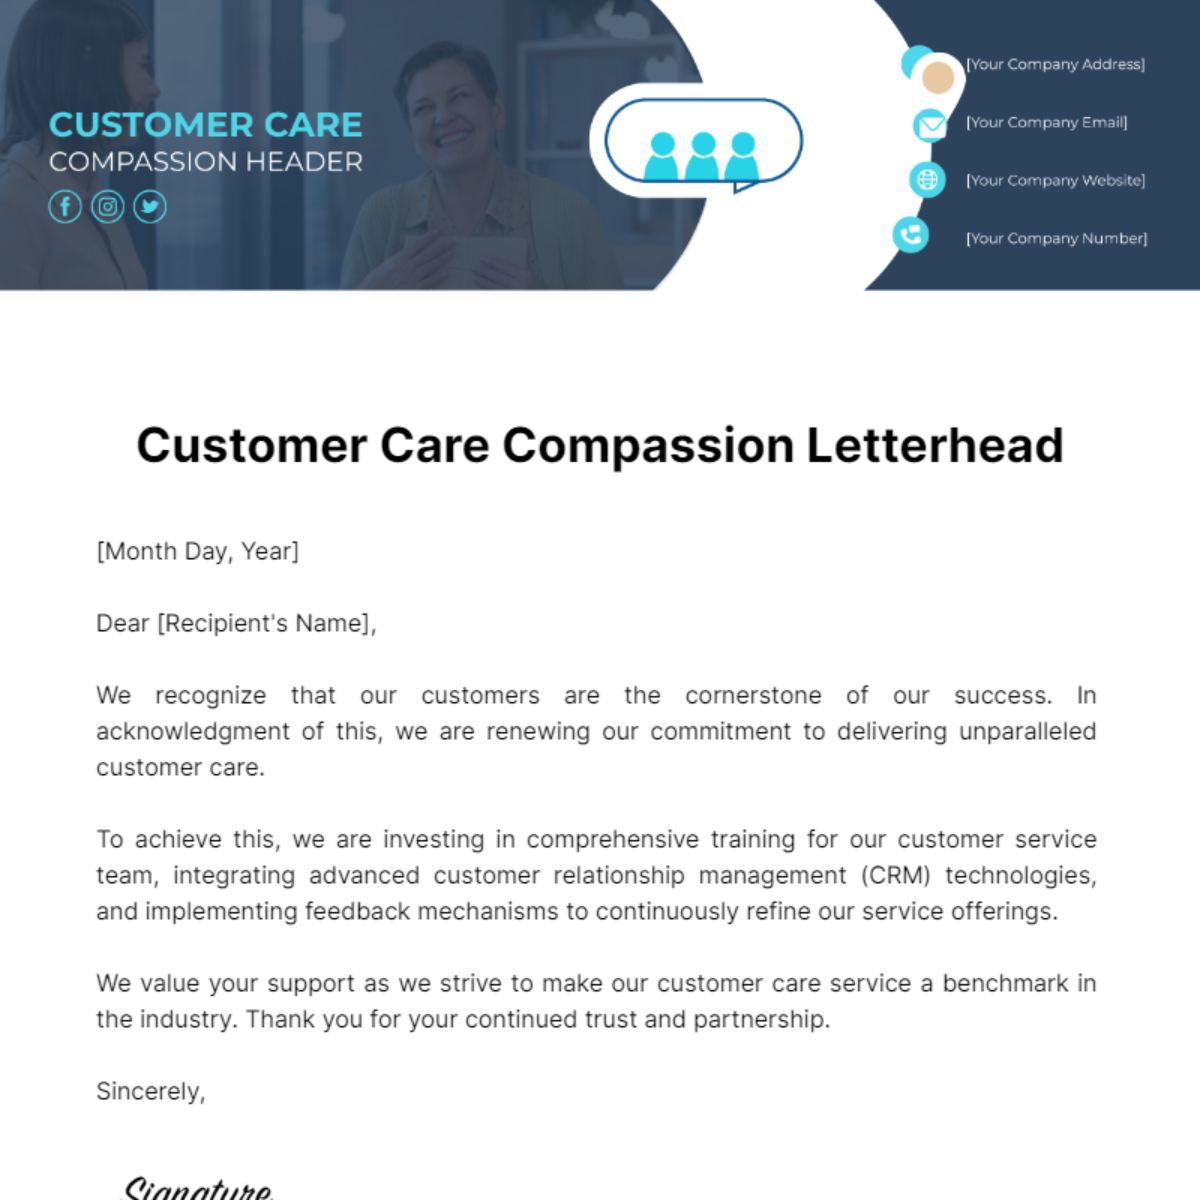 Free Customer Care Compassion Letterhead Template